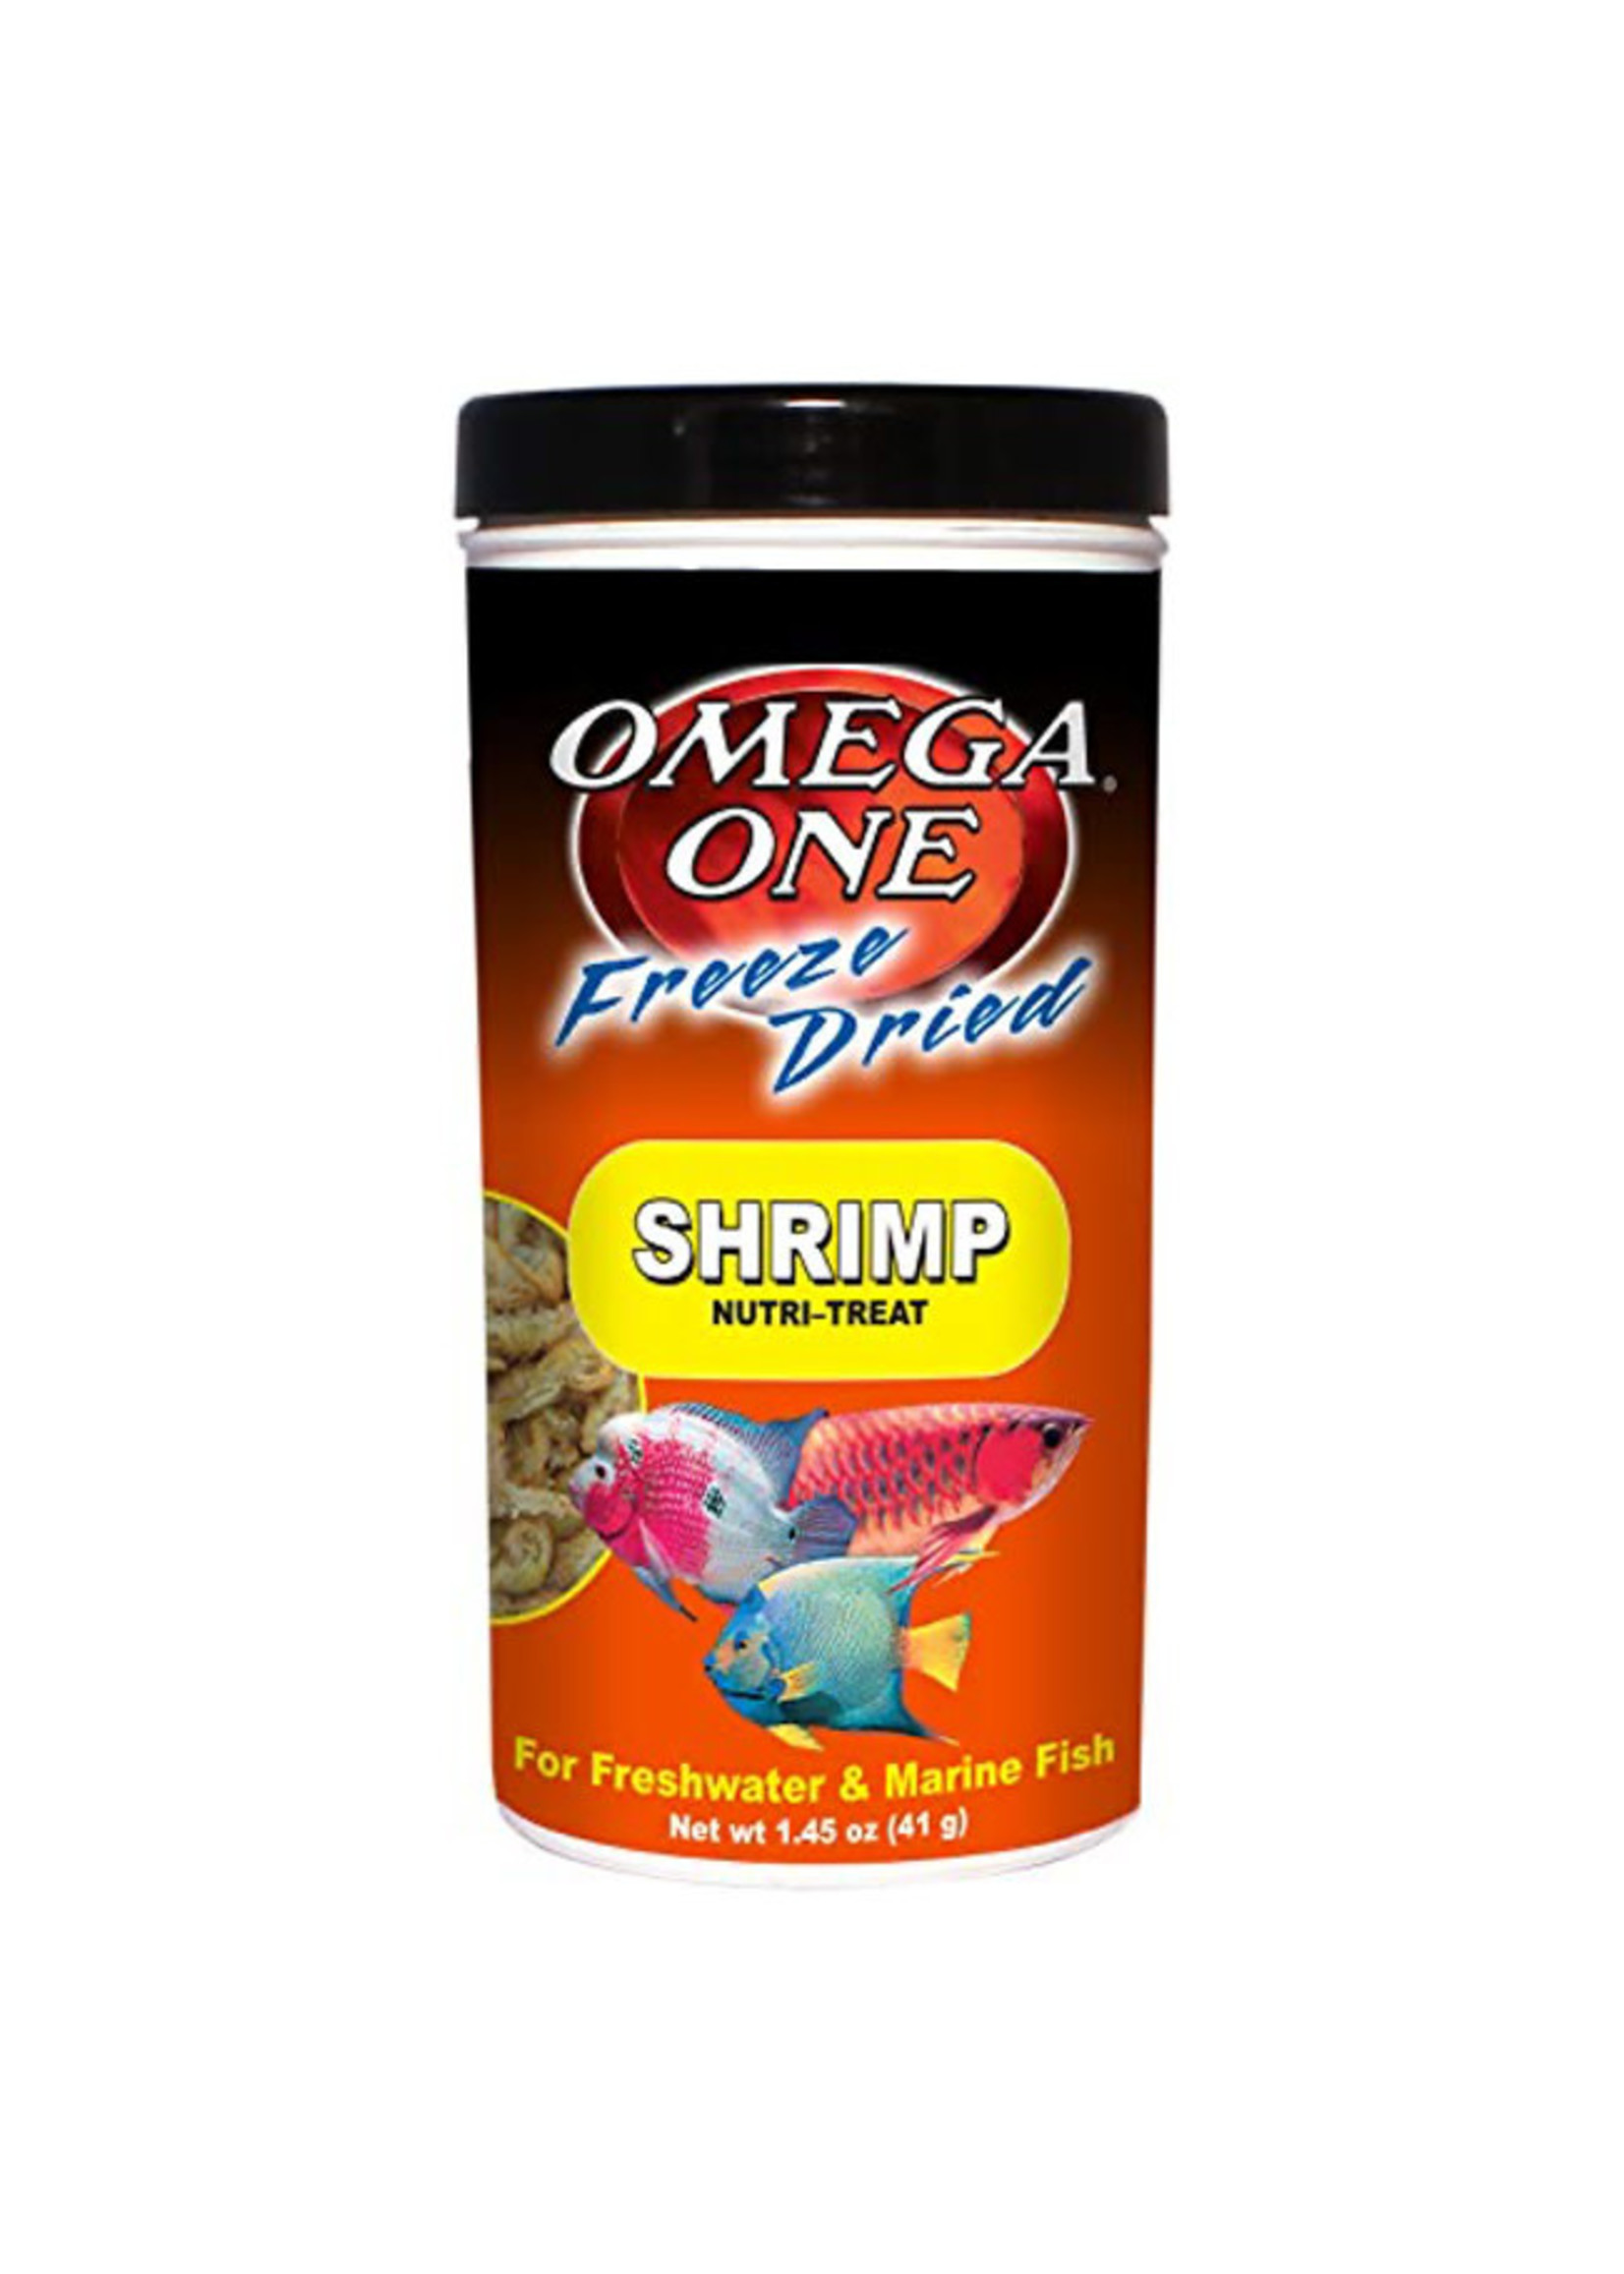 Omega One Omega One Freeze Dried Shrimp Nutri-Treat